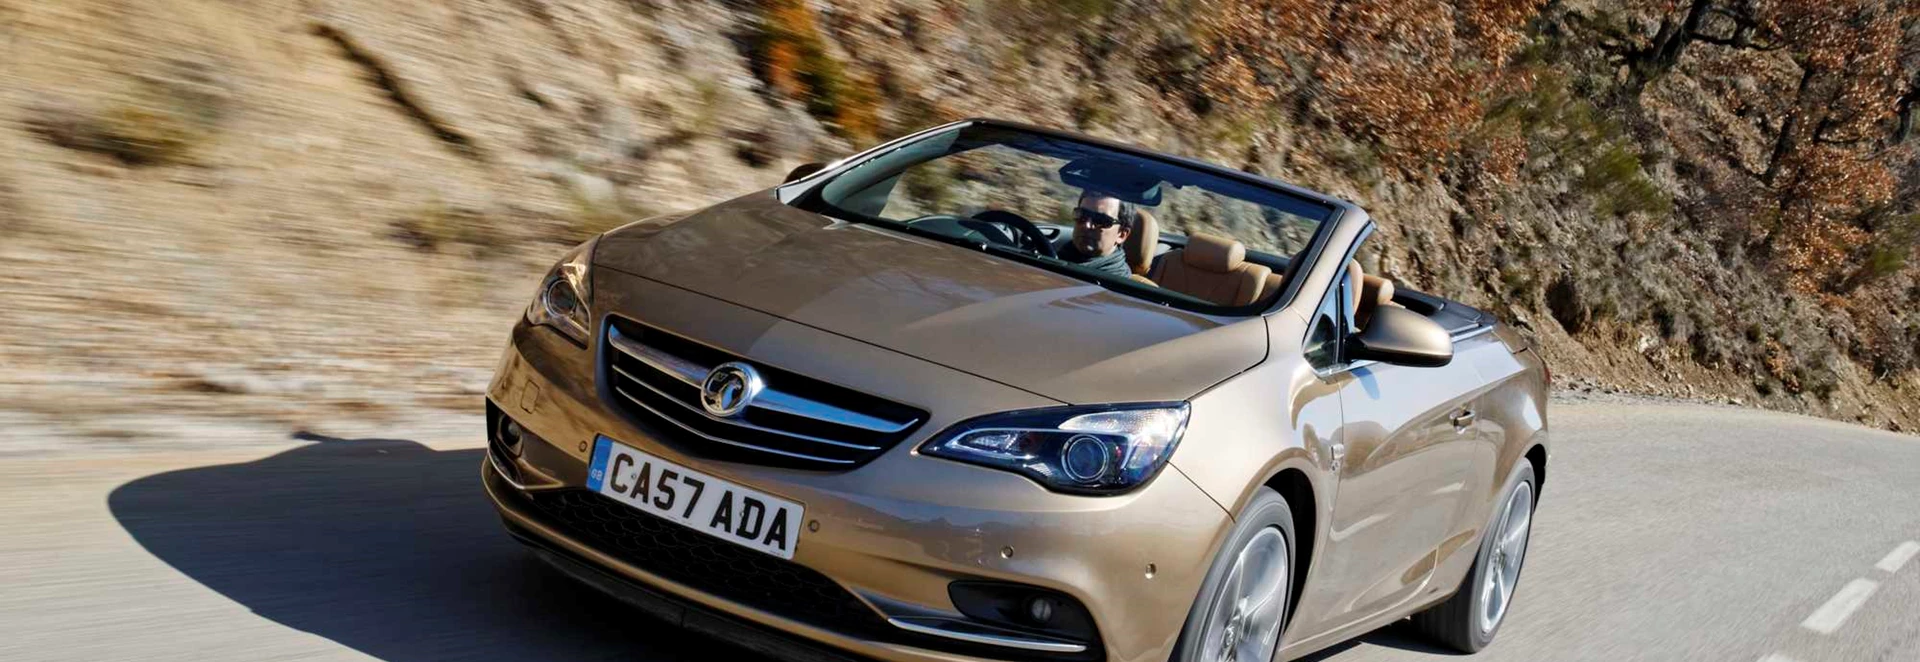 Vauxhall Cascada convertible review 